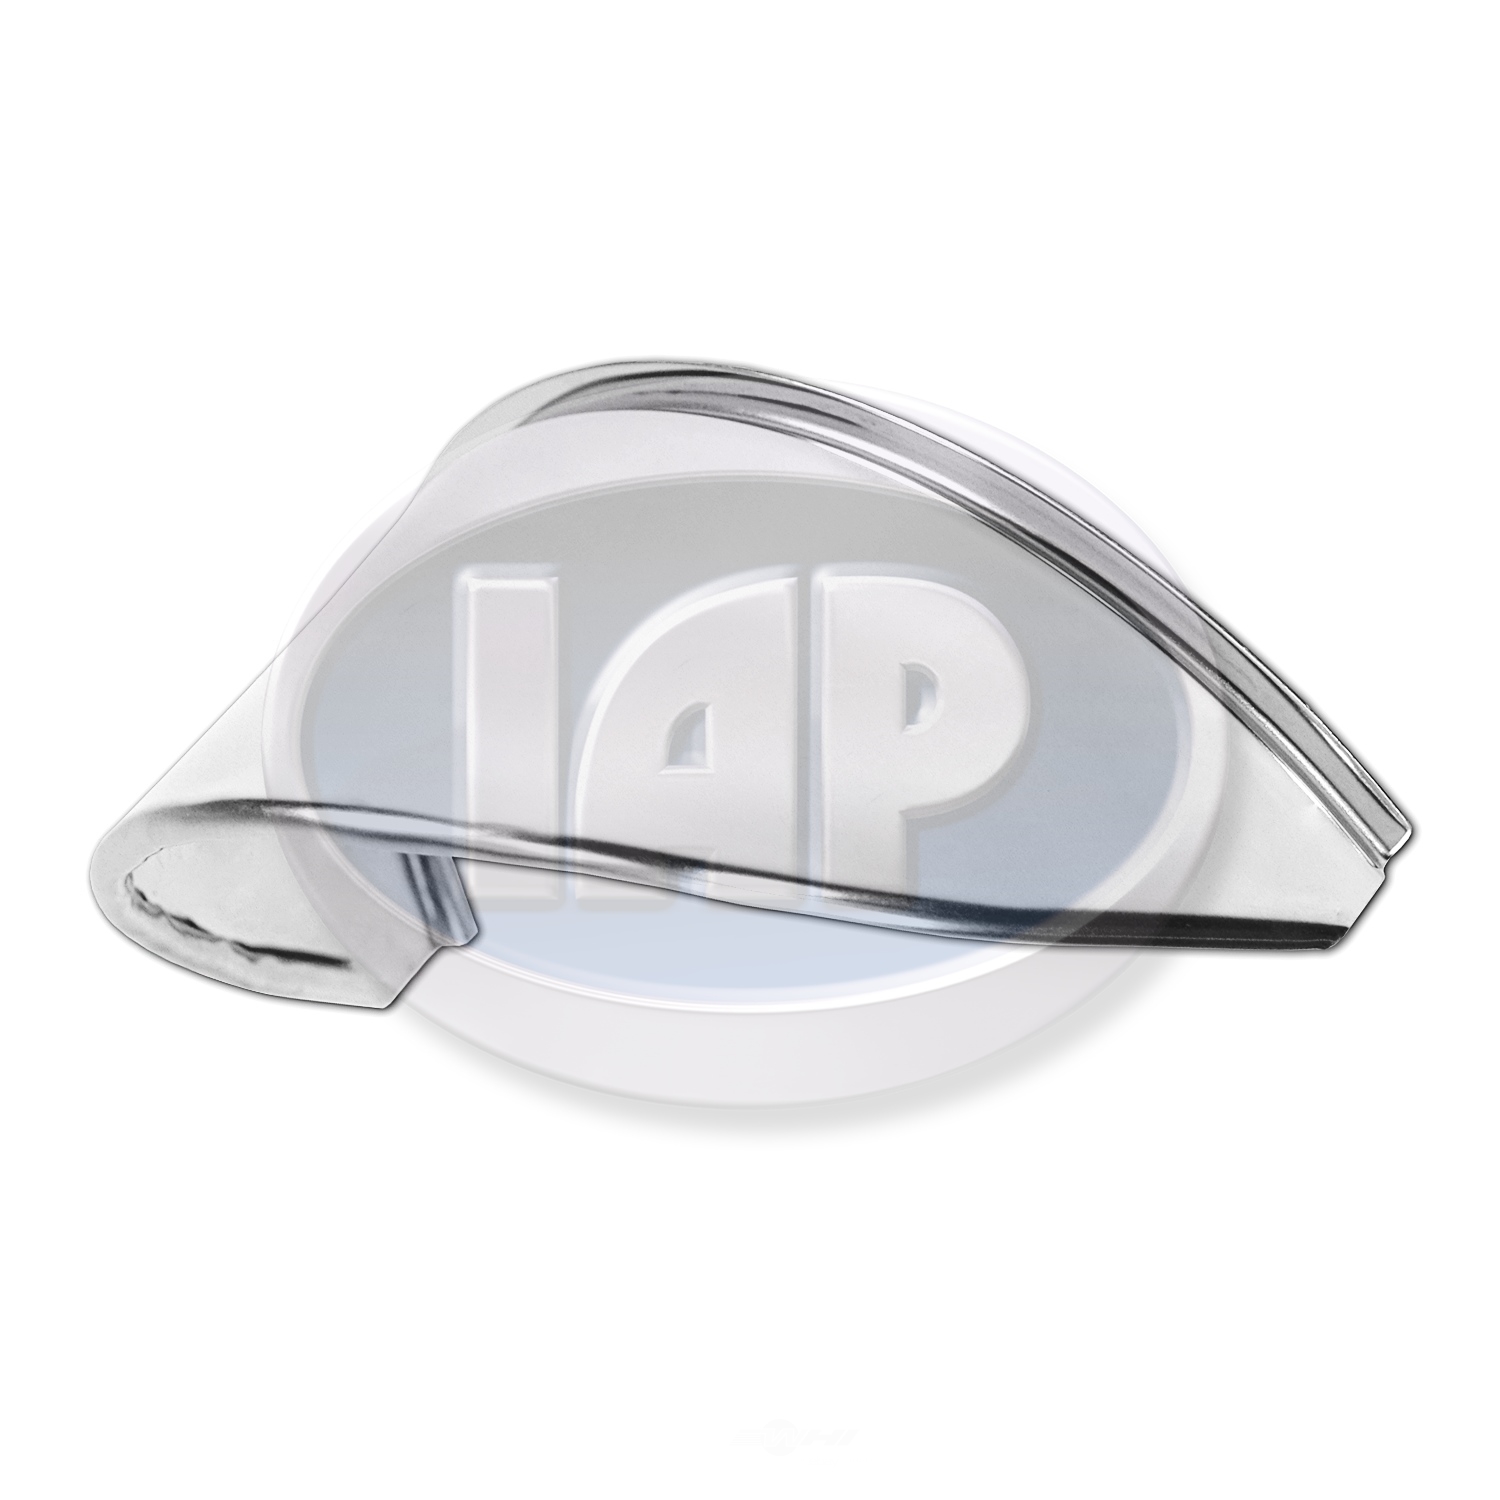 IAP/KUHLTEK MOTORWERKS - Headlight Visor - KMS AC941302B